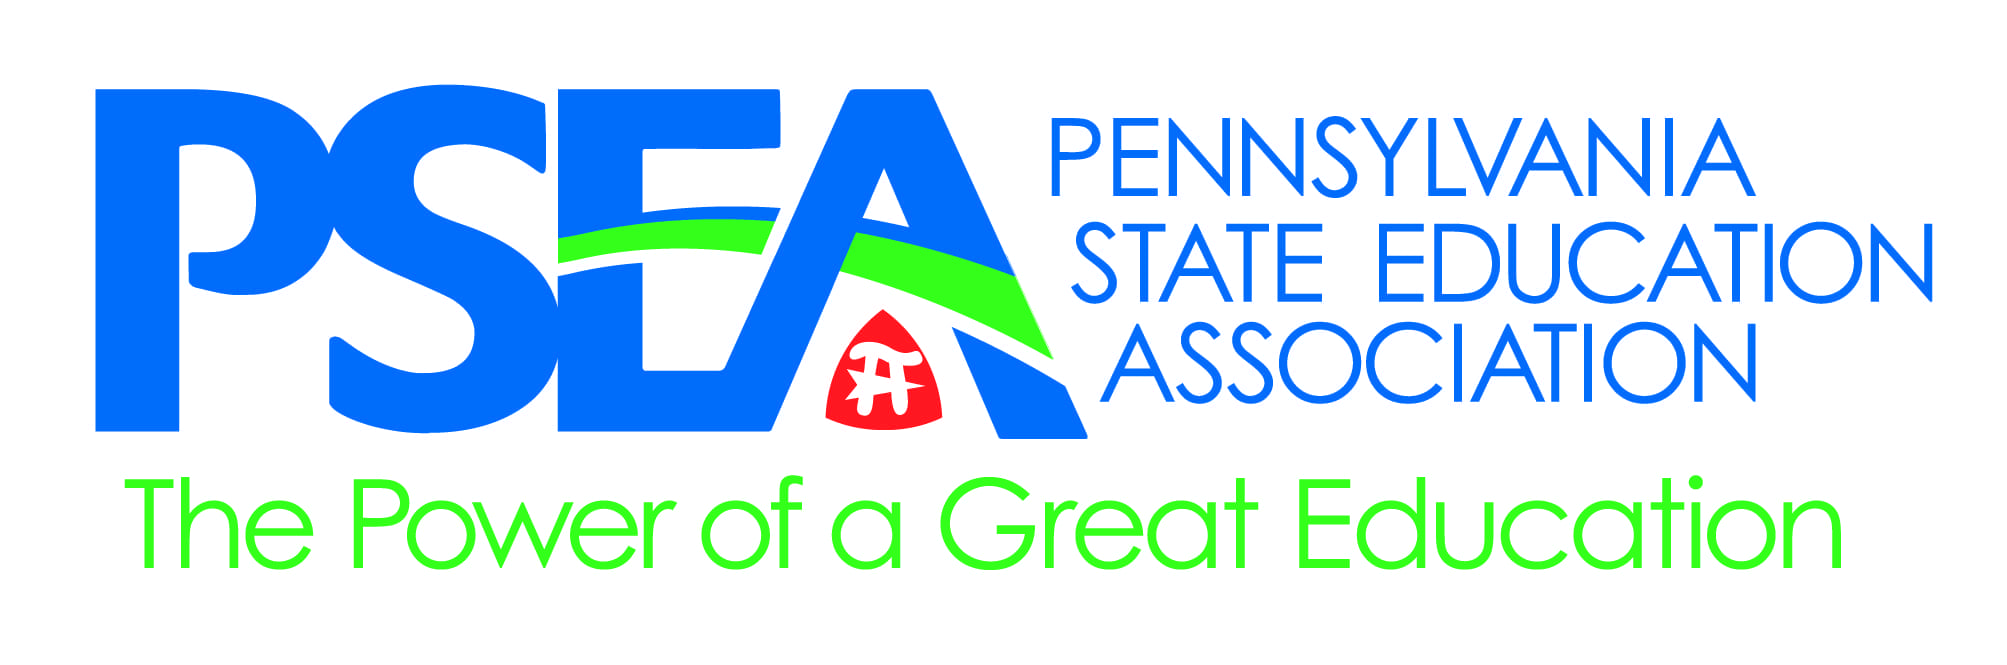 Pennsylvania State Education Association Logo